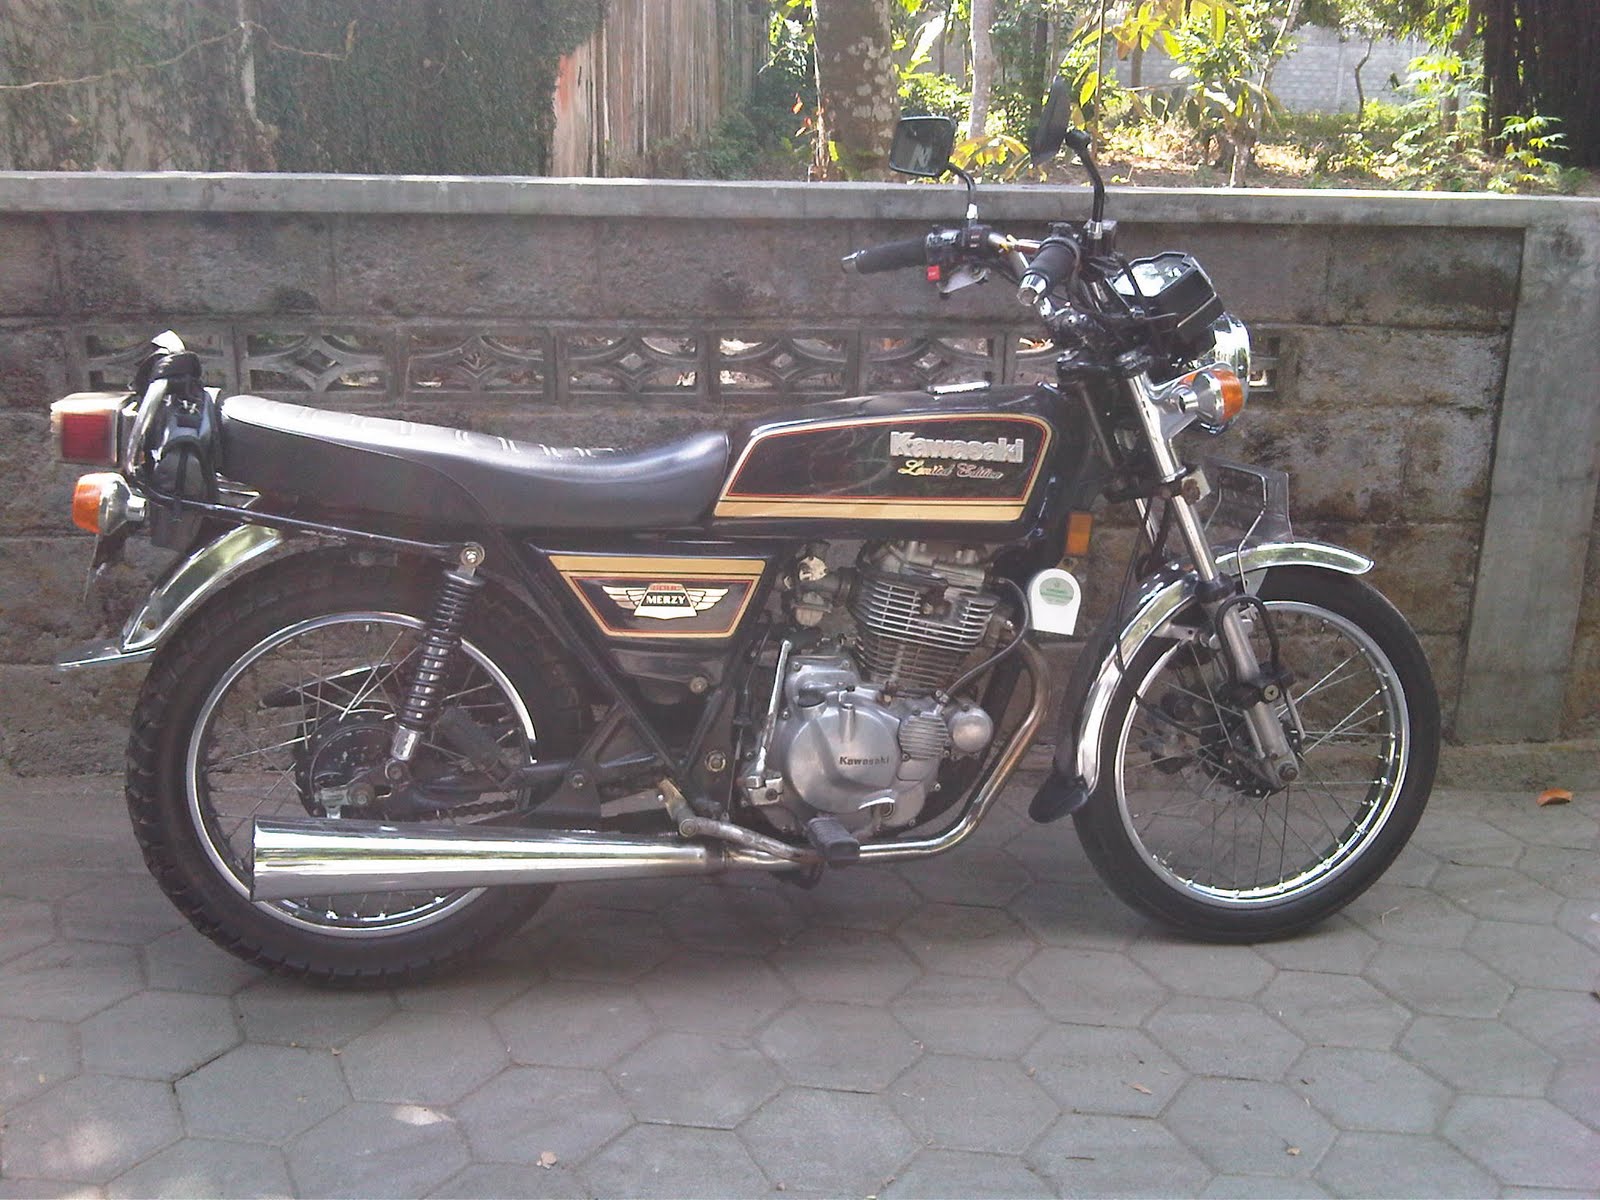 tweet Pol Bonde Modifikasi Kawasaki Binter Merzy KZ200 - Classic and Vintage Motorcycles